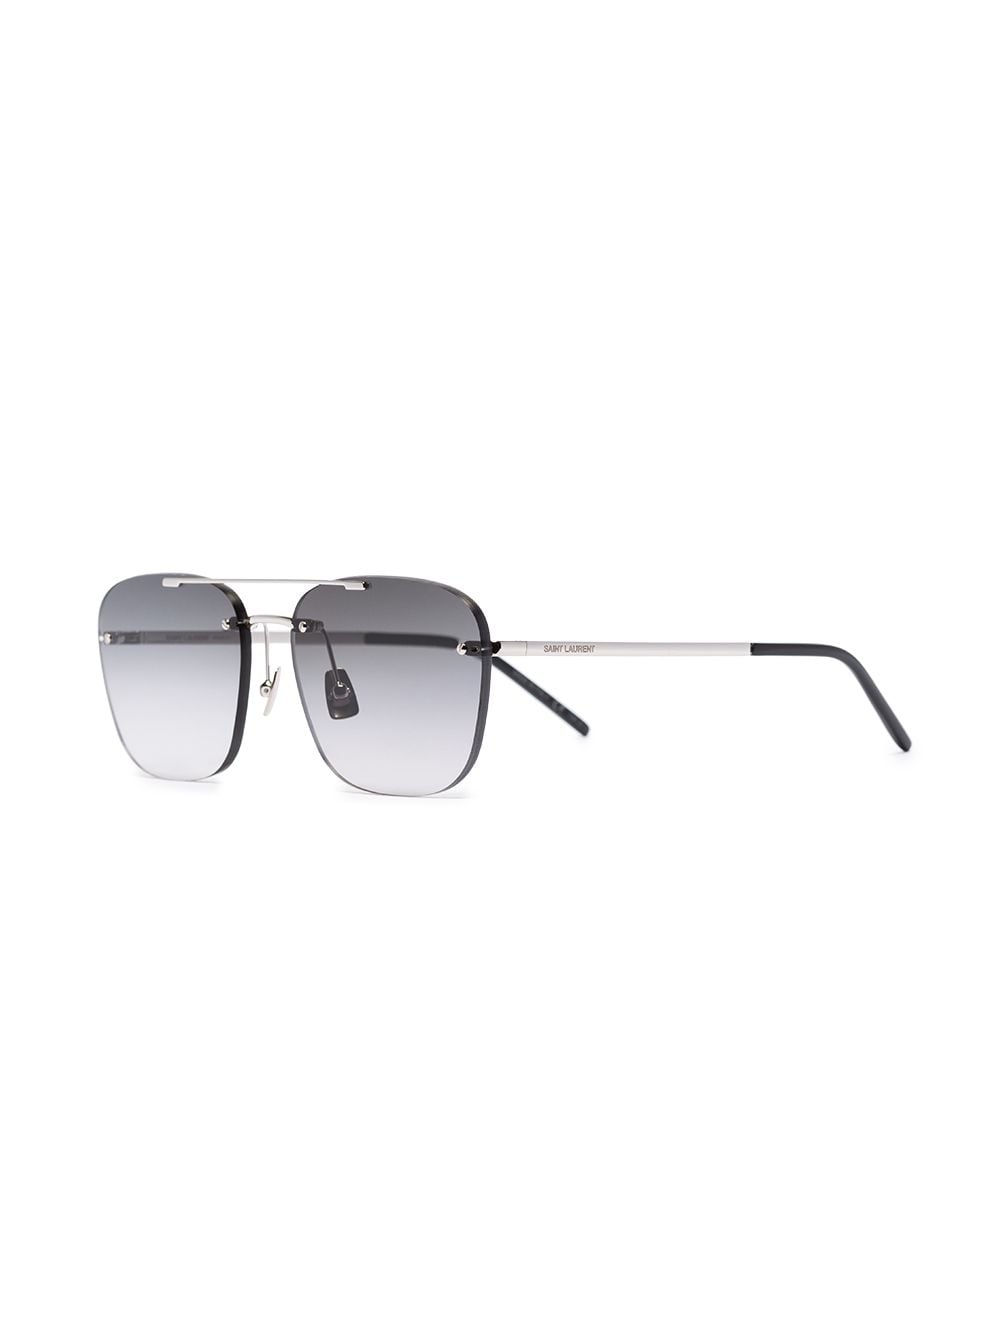 Saint Laurent SL 309 Rimless Unisex Sunglasses